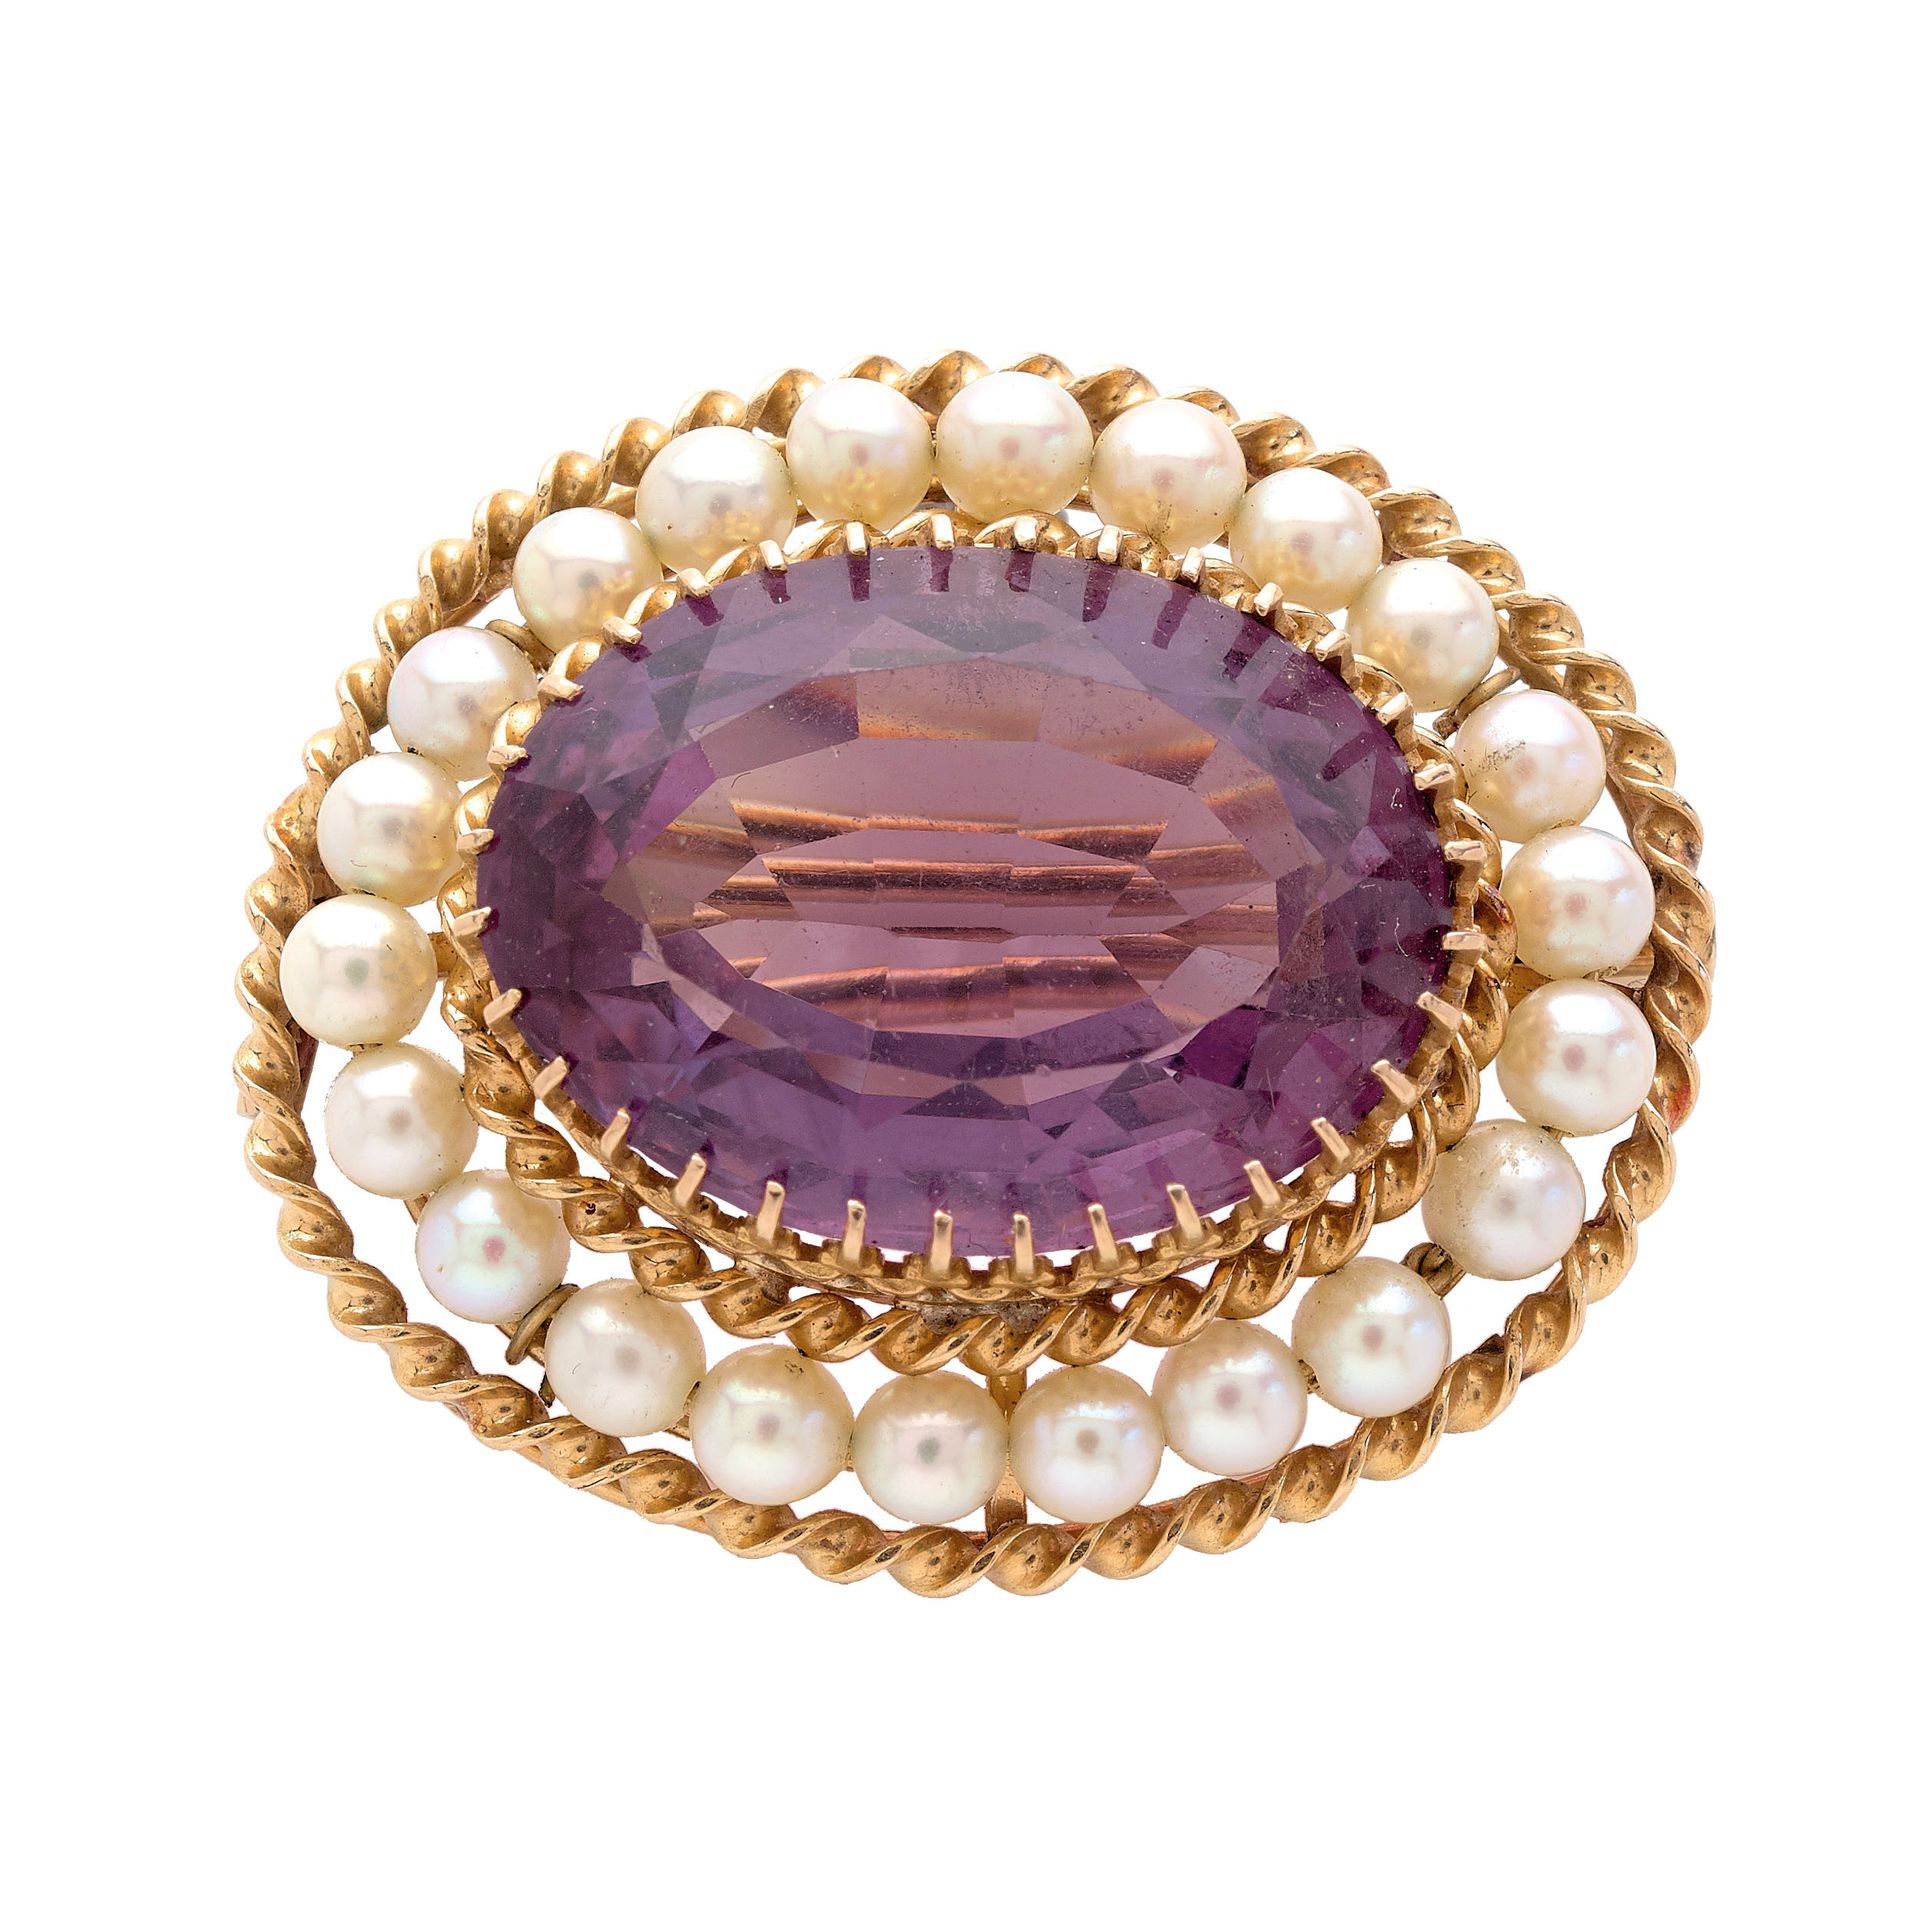 Null 古老的手镯

光滑的黄金，镶嵌着一个椭圆形的紫水晶，周围是小珍珠。

一枚紫水晶、珍珠和18K金胸针。



RC :

尺寸：4 x 3厘米左右。
&hellip;